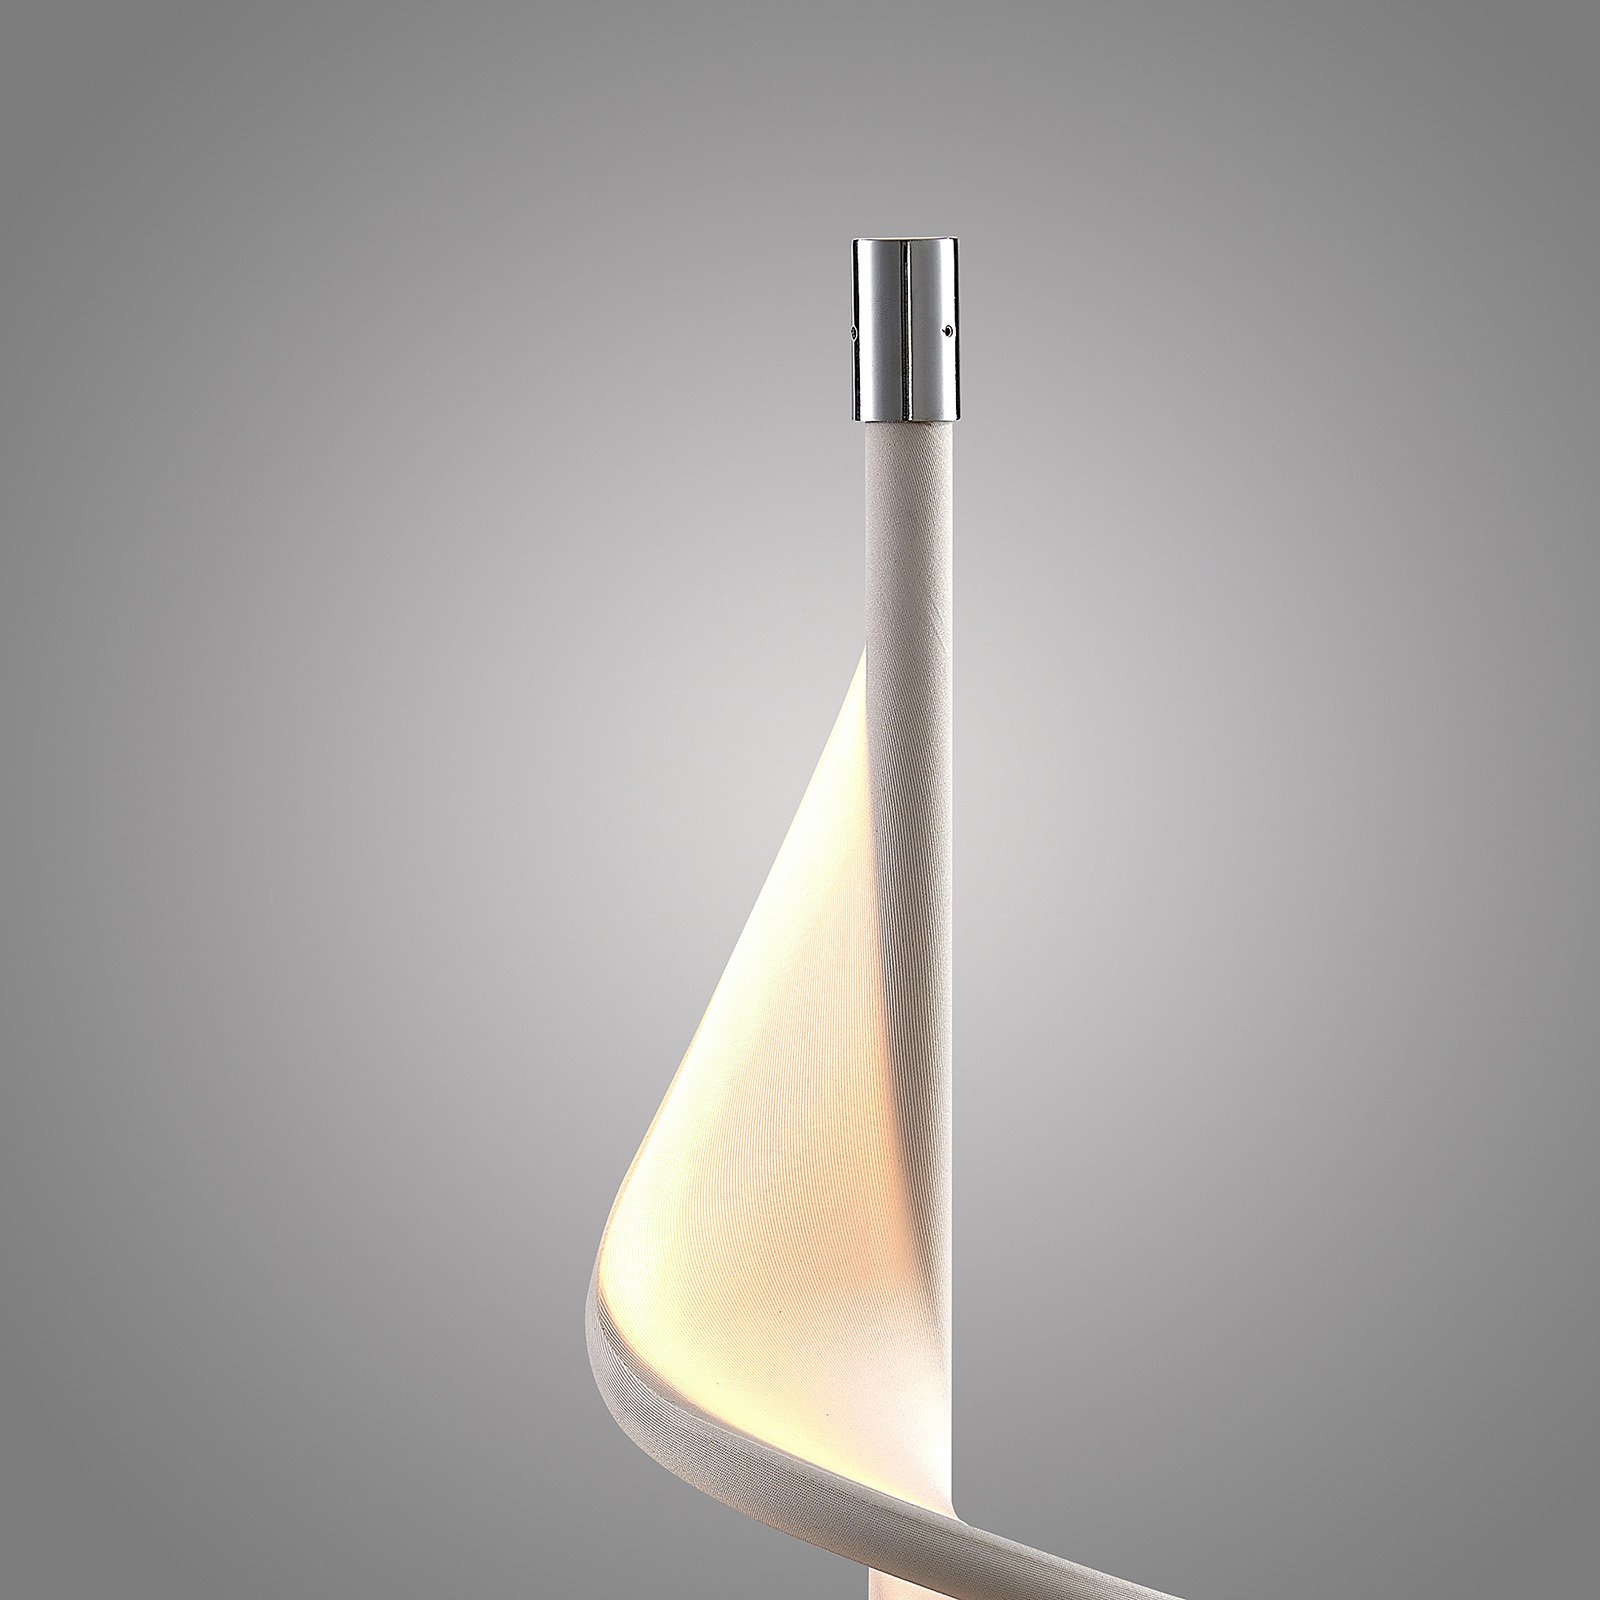 Lucande Edano LED tafellamp in gedraaide vorm